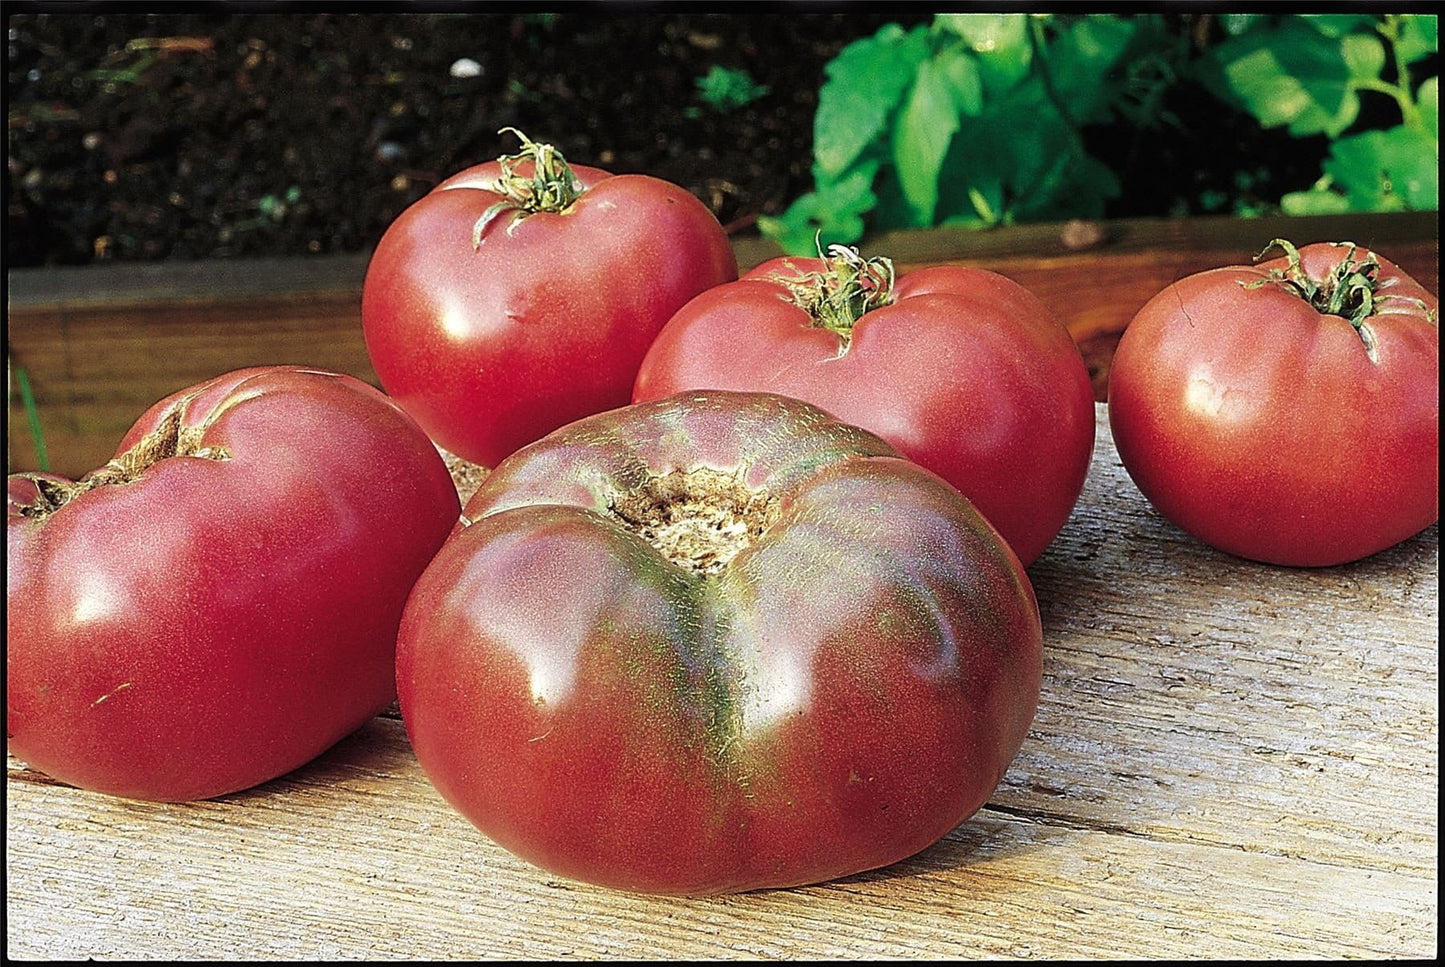 Tomato Cherokee Purple Seeds